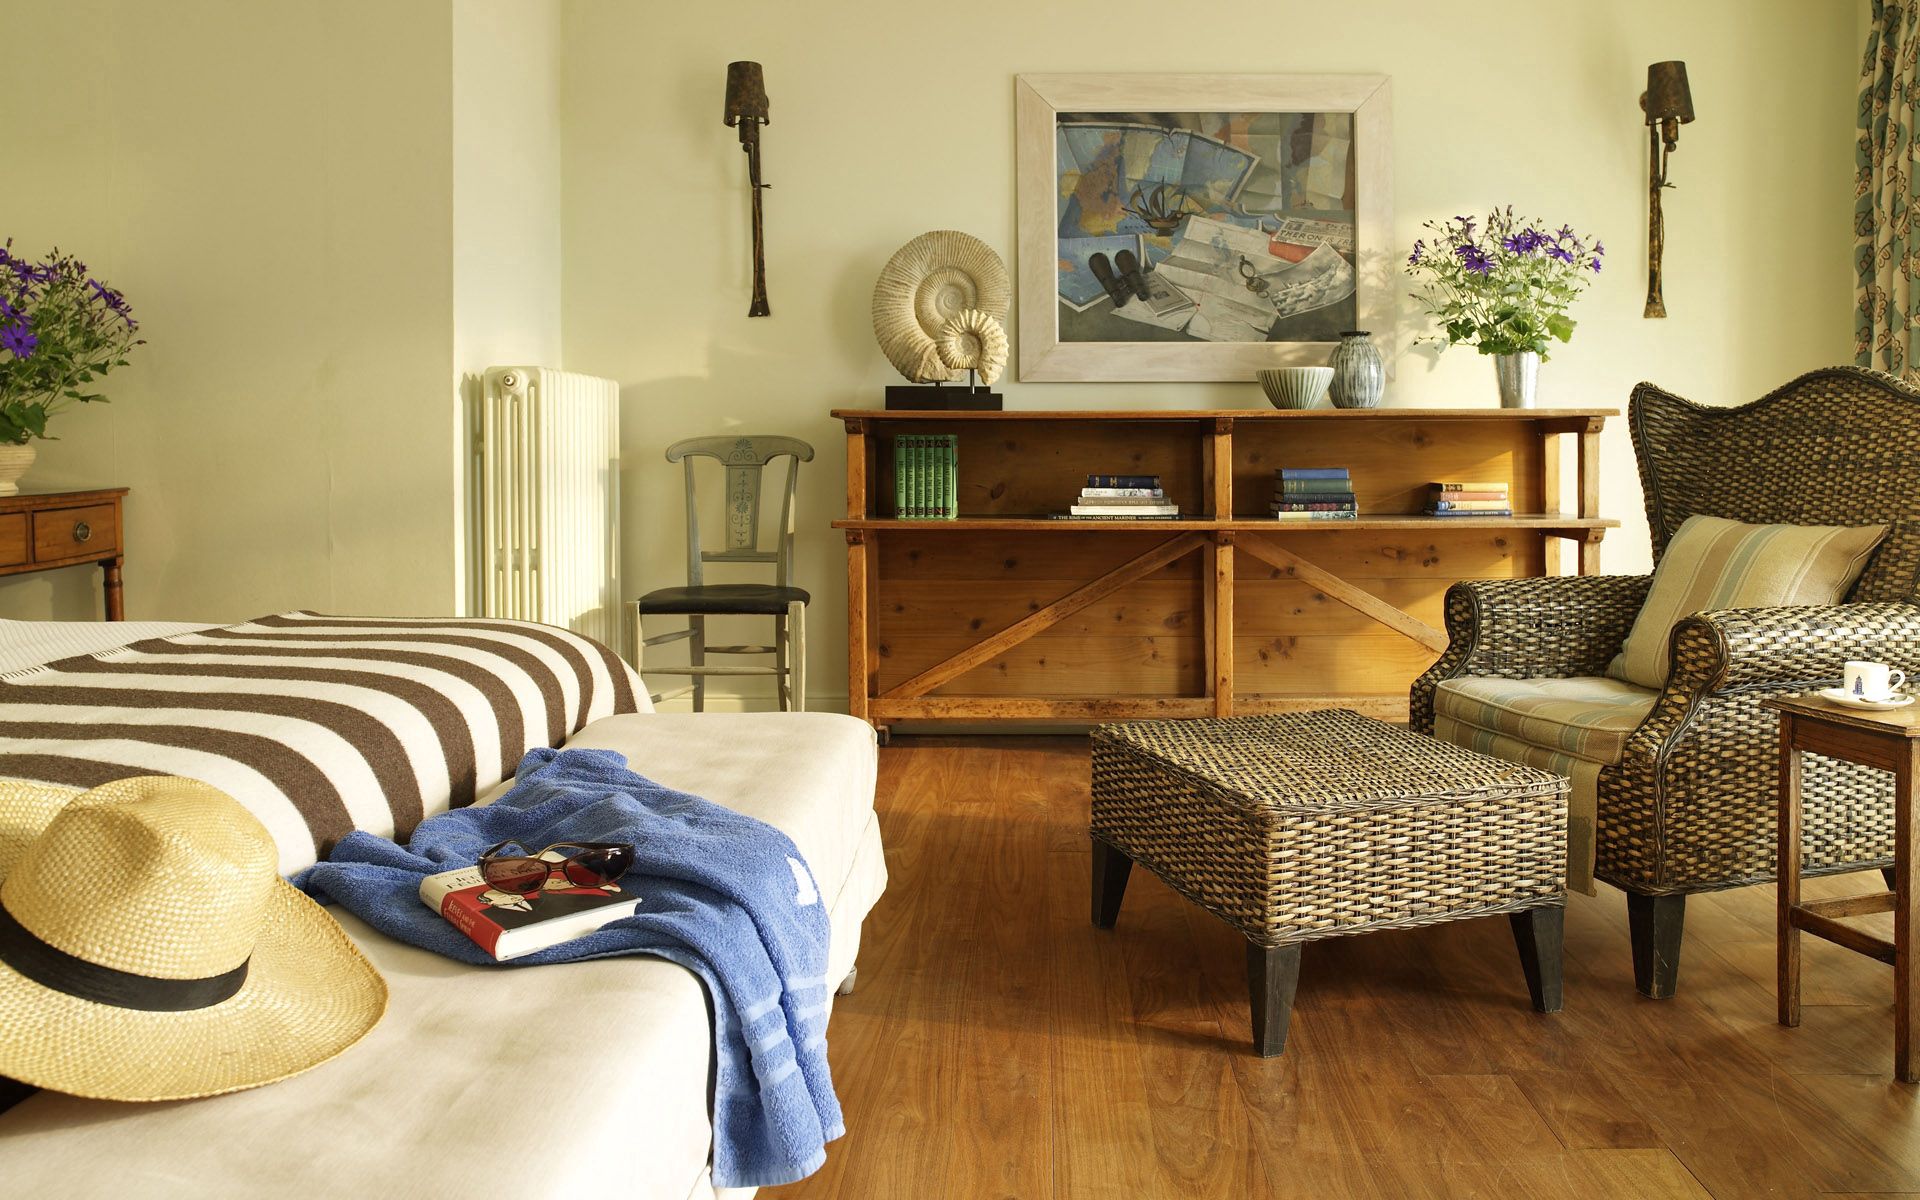 interior, miscellanea, miscellaneous, room, furniture, coziness, comfort